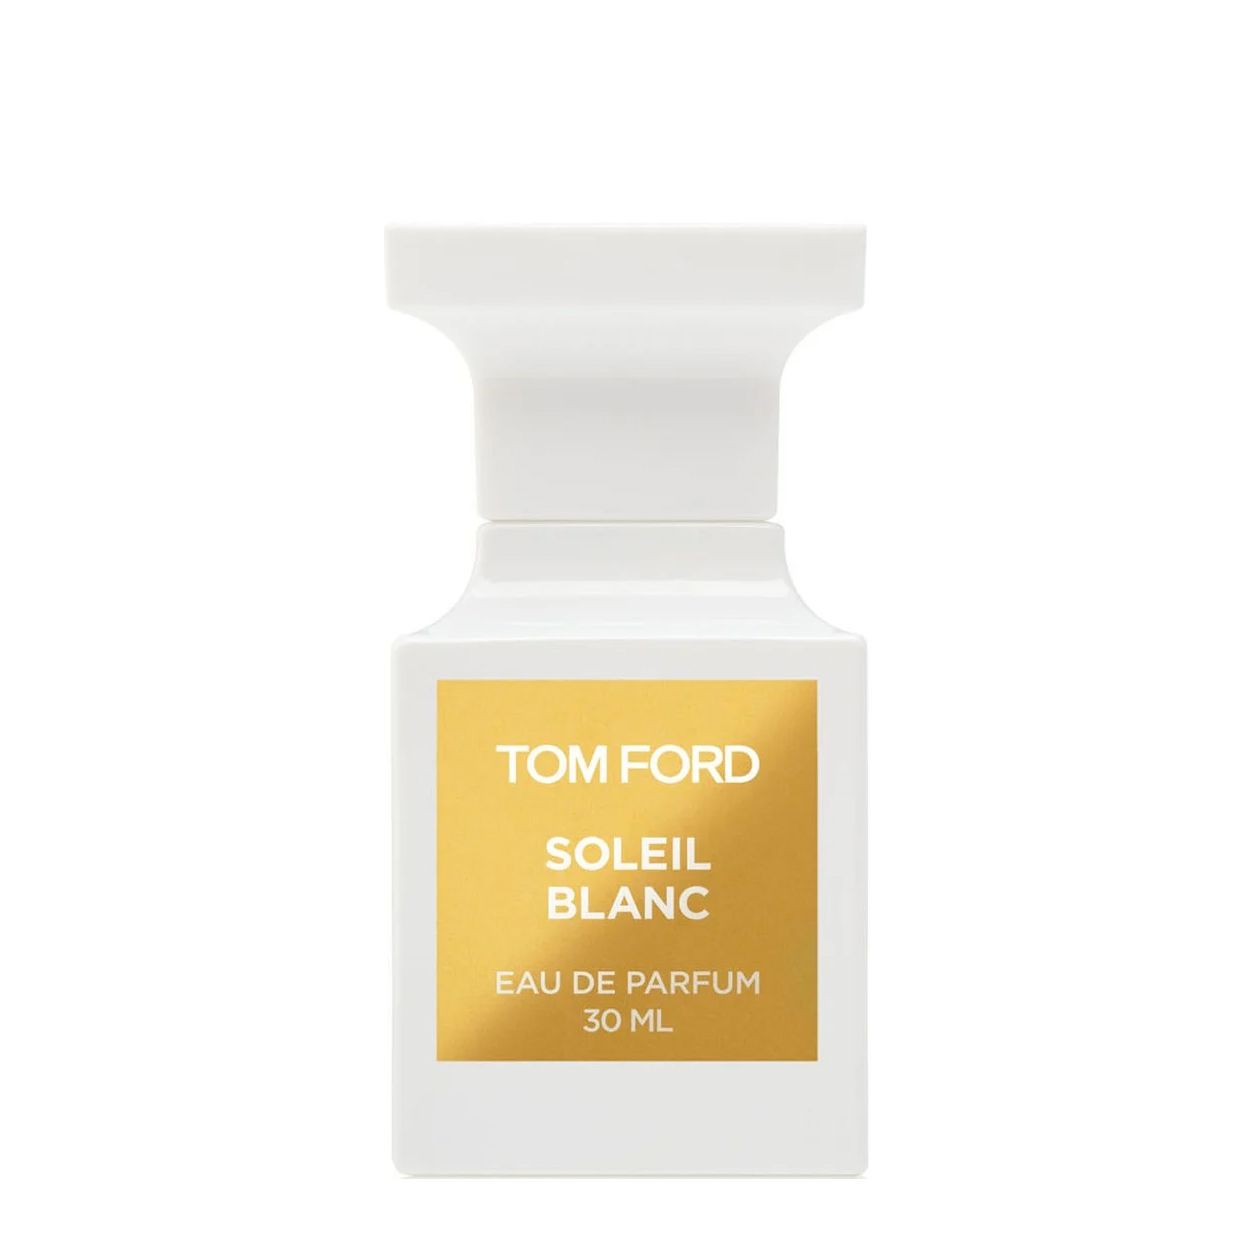 Вода парфюмерная Tom Ford Soleil Blanc, унисекс, 30 мл tom ford хайлайтер soleil neige